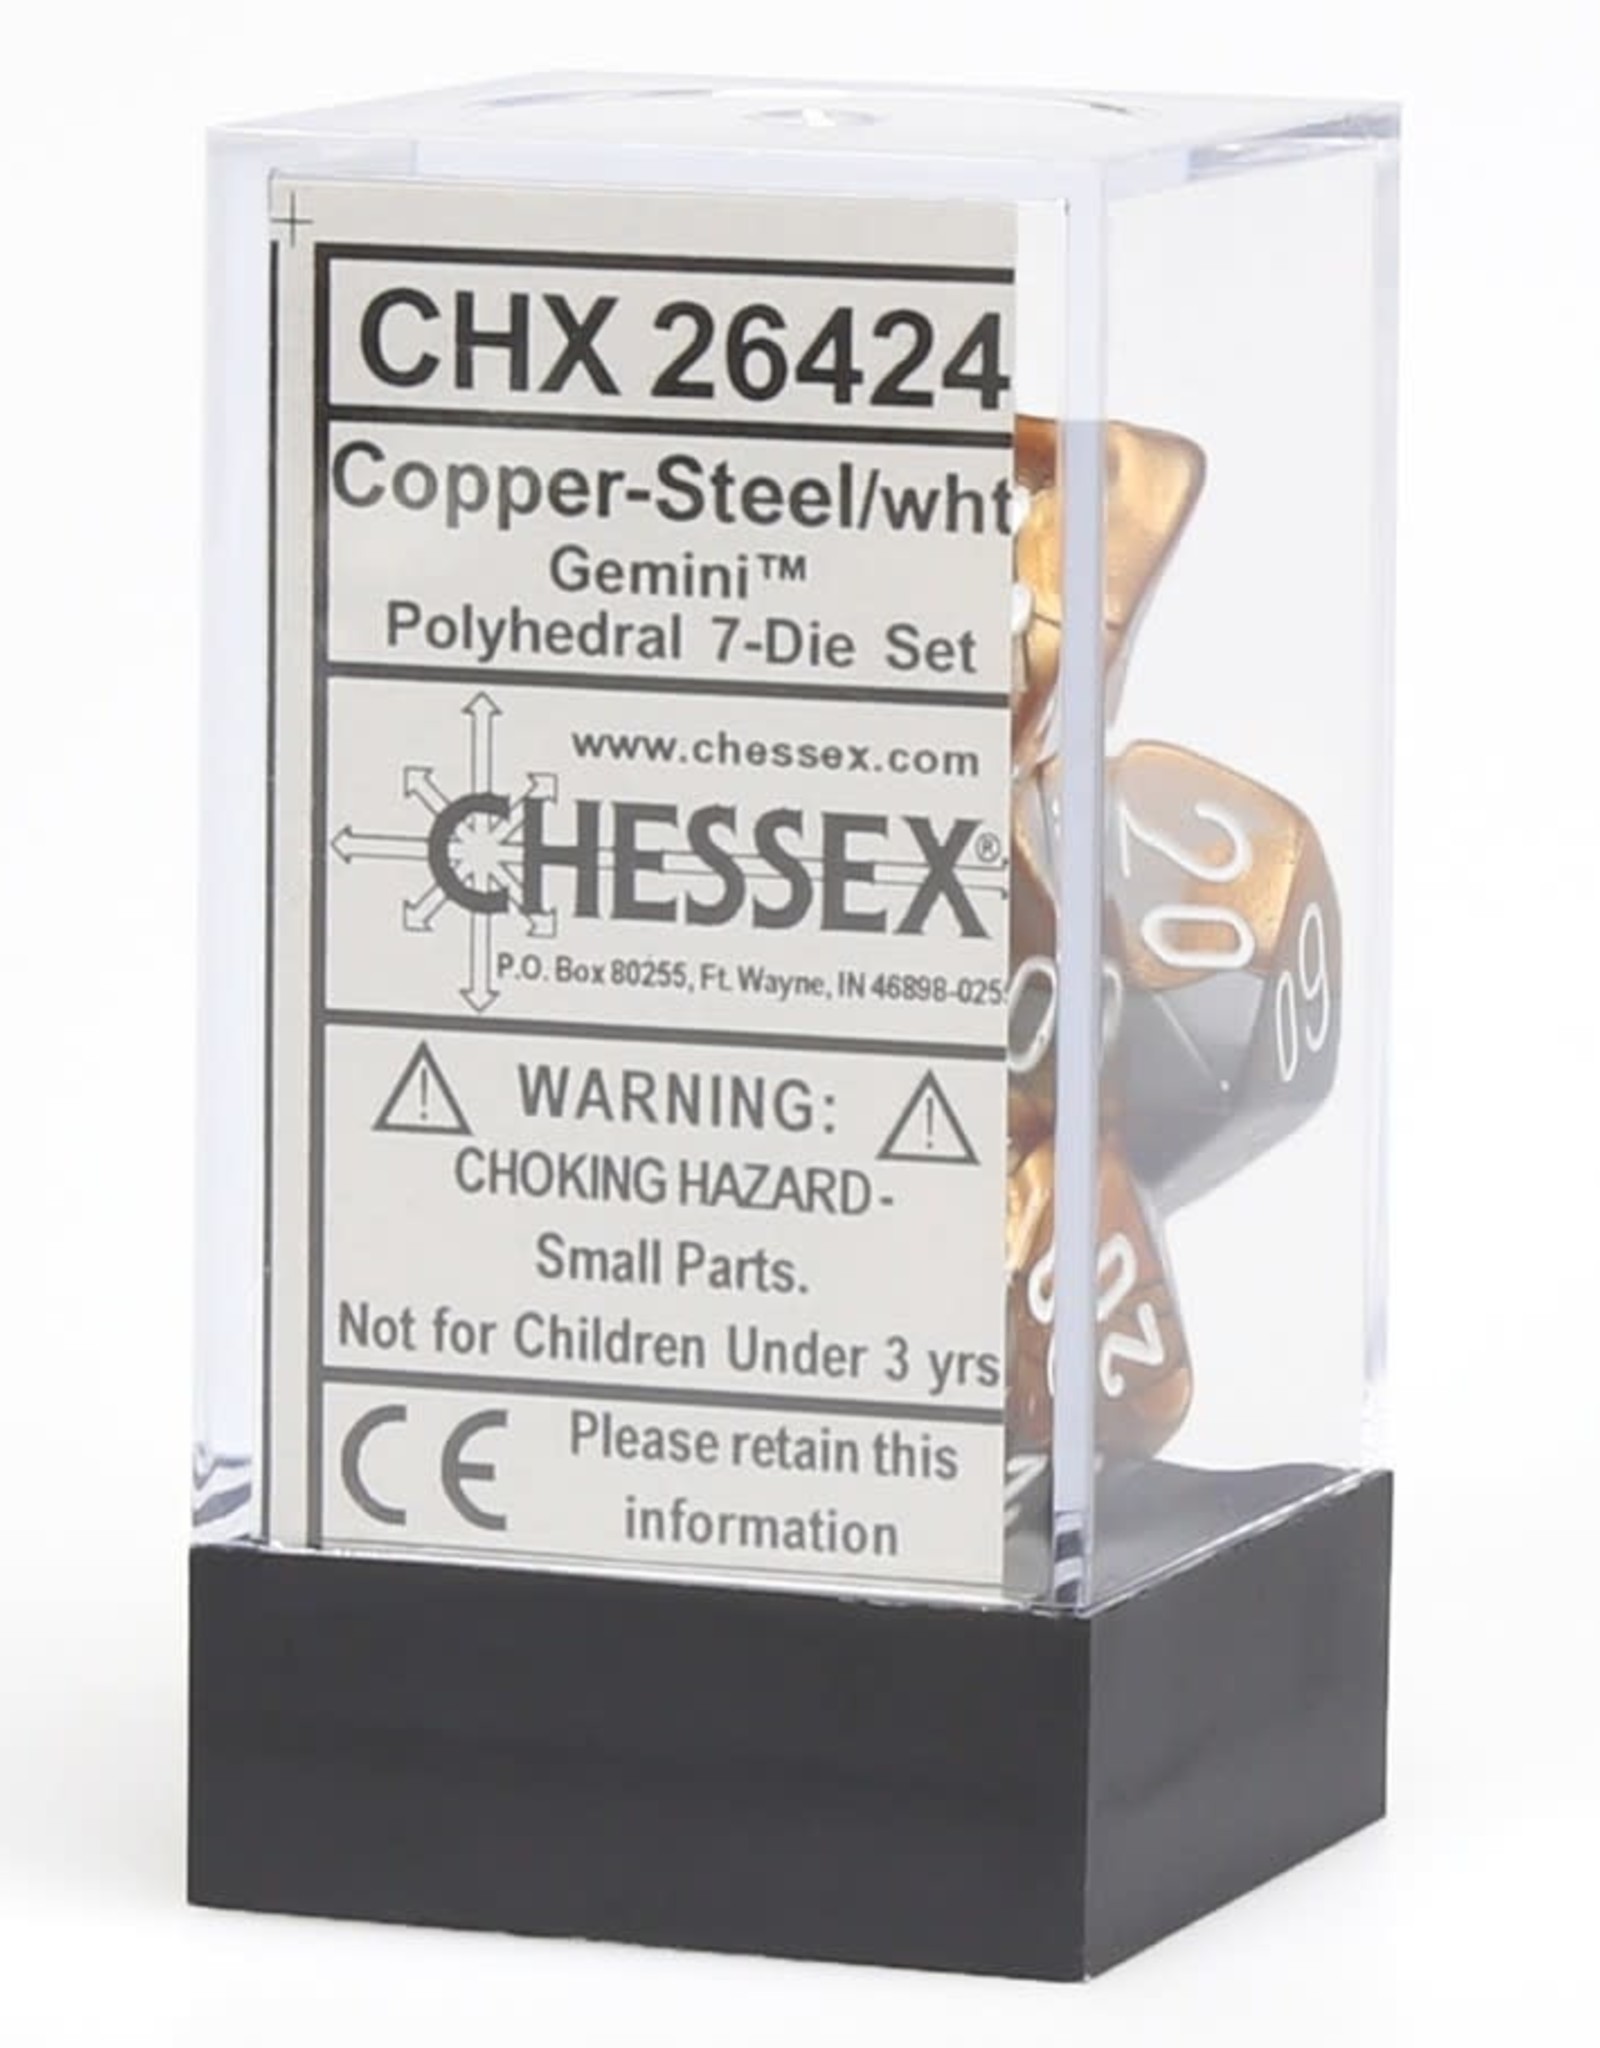 Chessex CHX Gemini Dice: Copper-Steel/White Poly 7-Die Set 26424